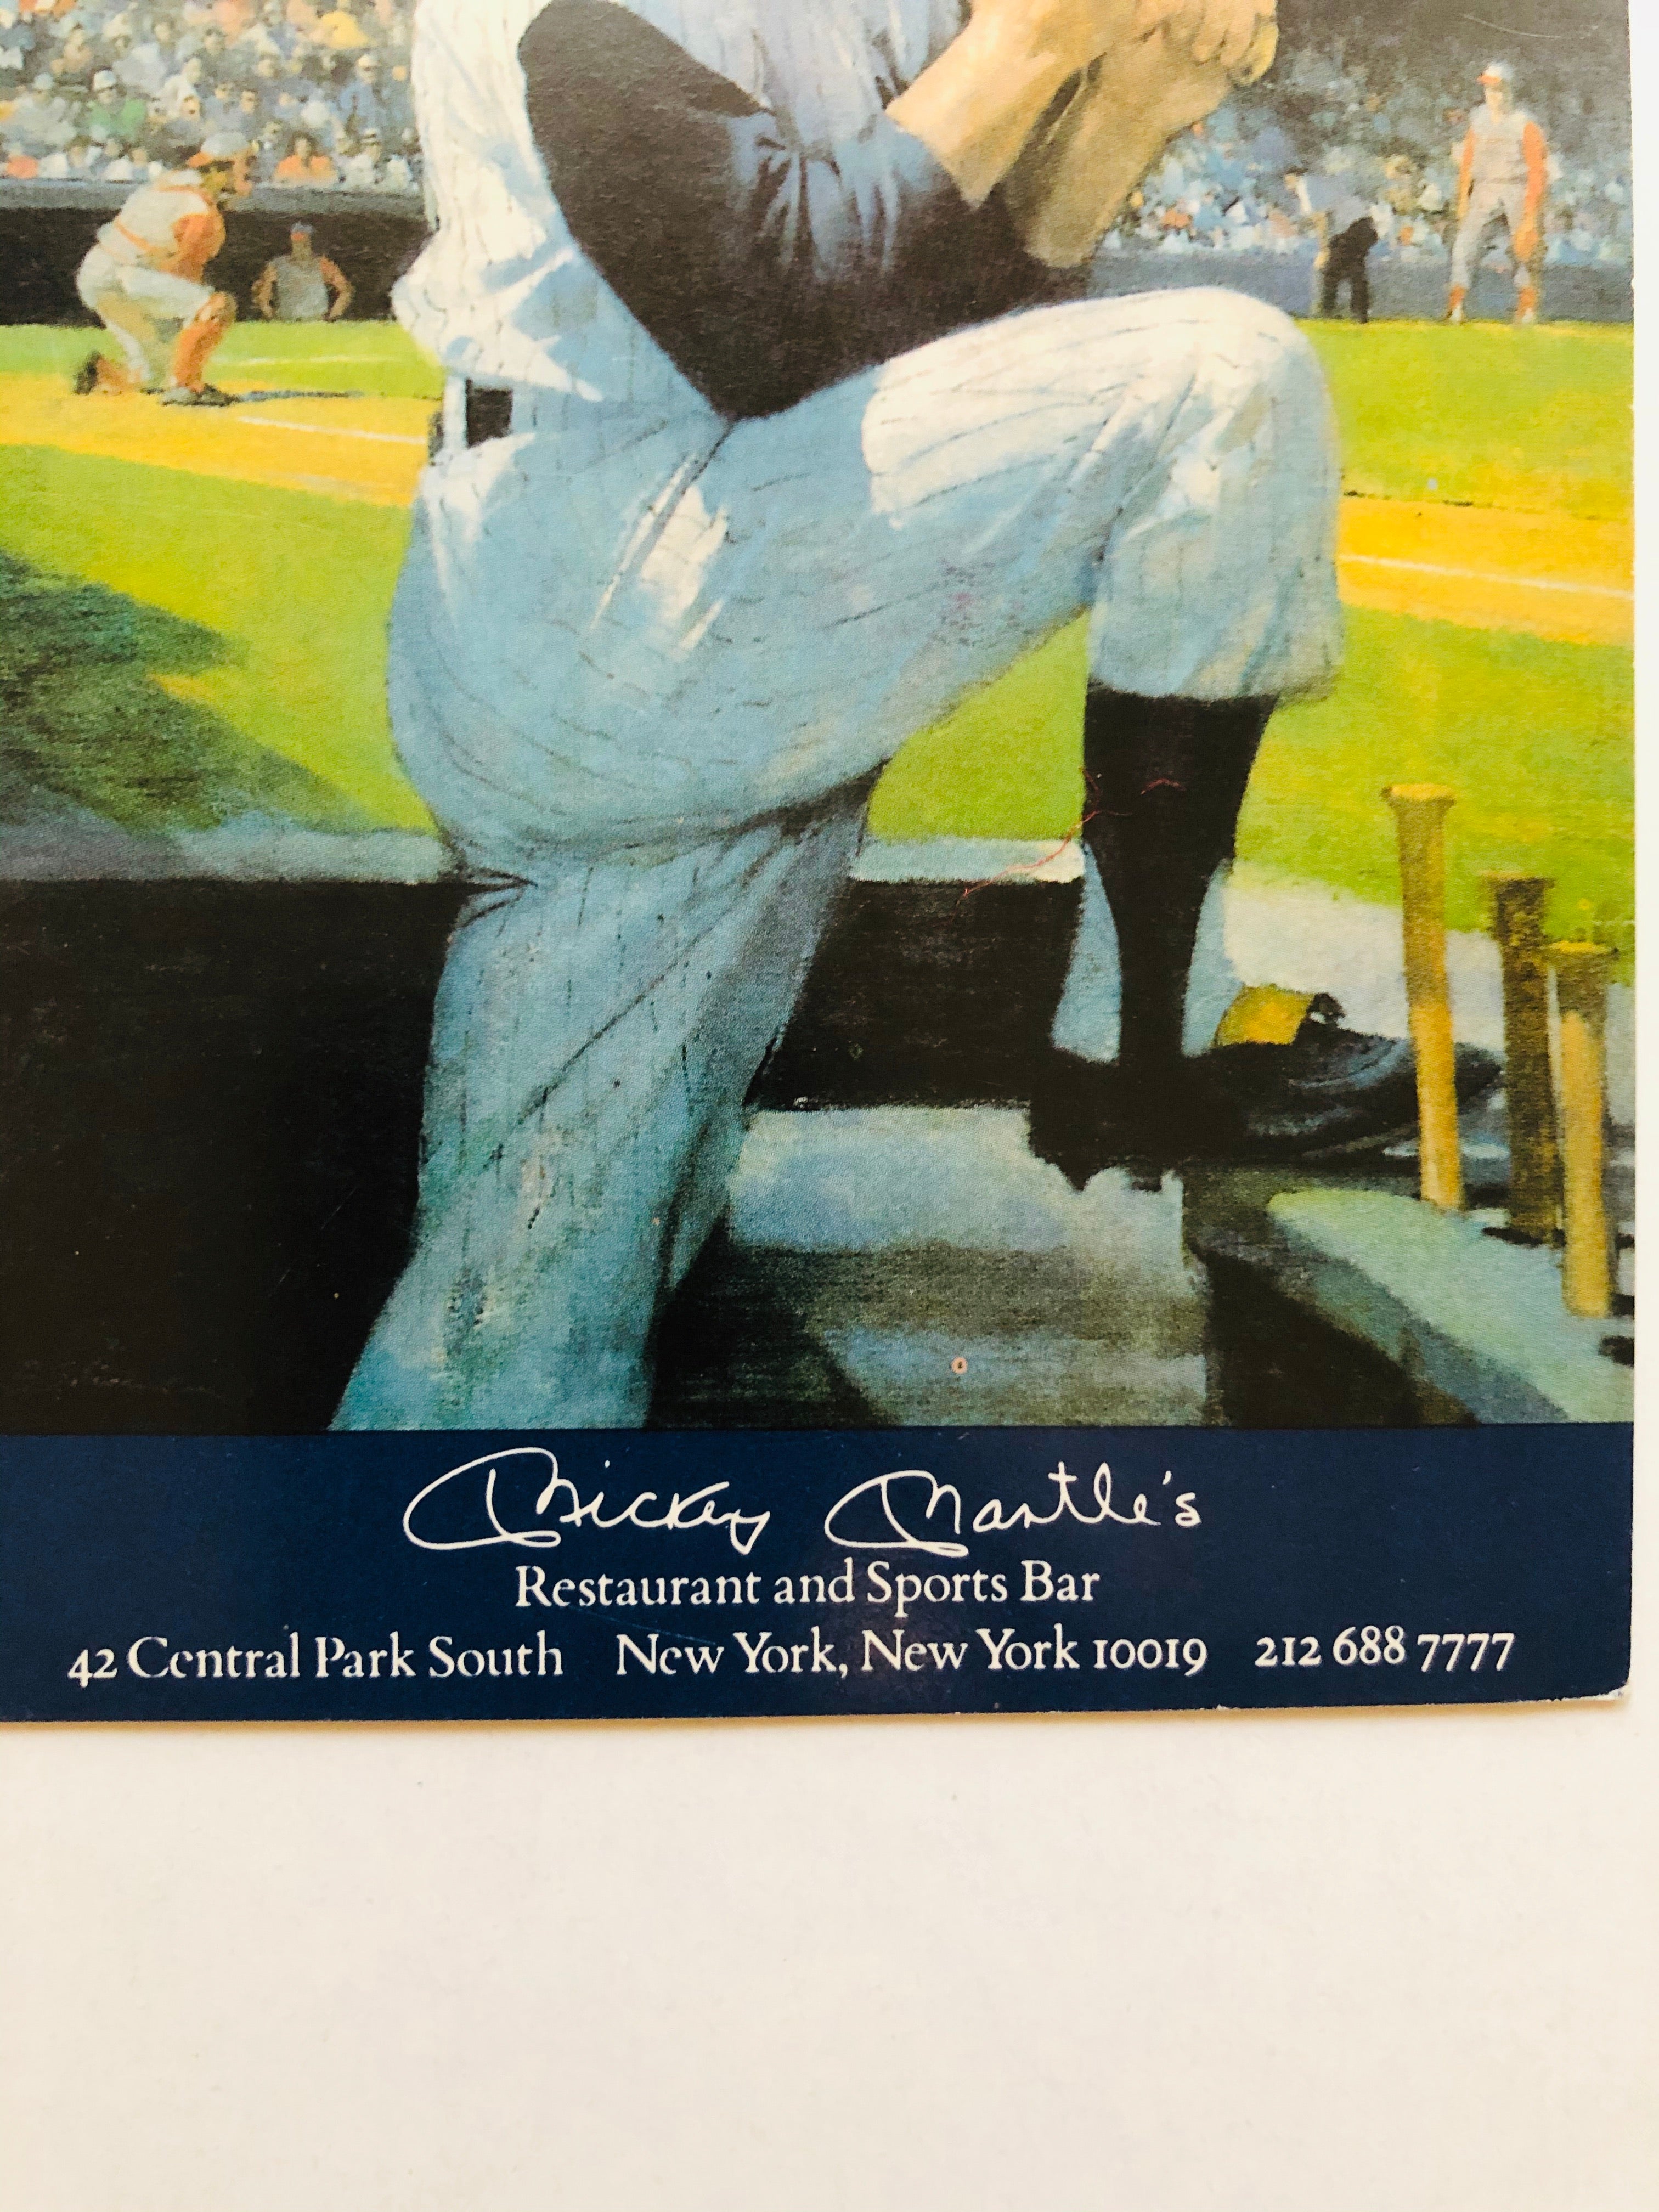 Mickey Mantle baseball legend rare restaurant postcard 1980s